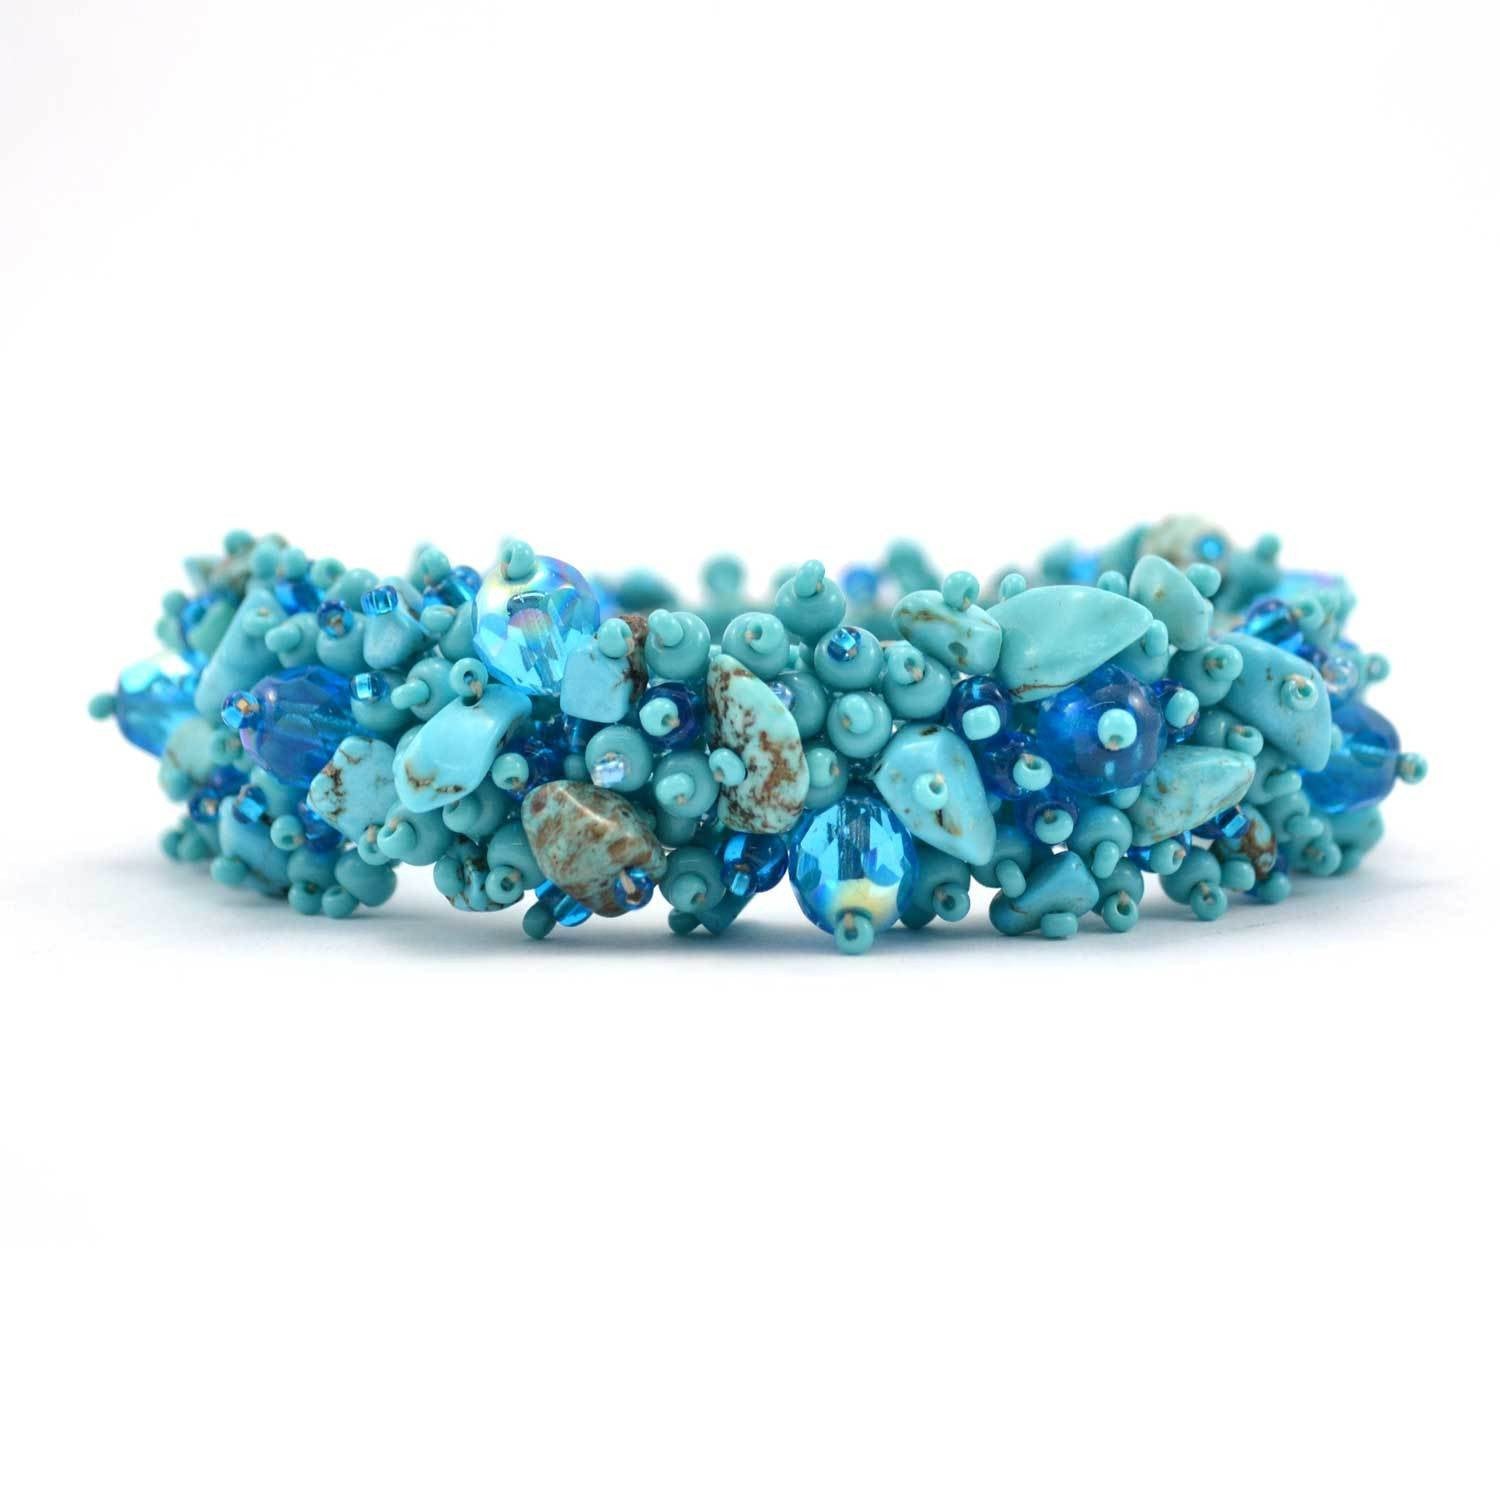 Magnetic Stone Caterpillar Bracelet - Turquoise